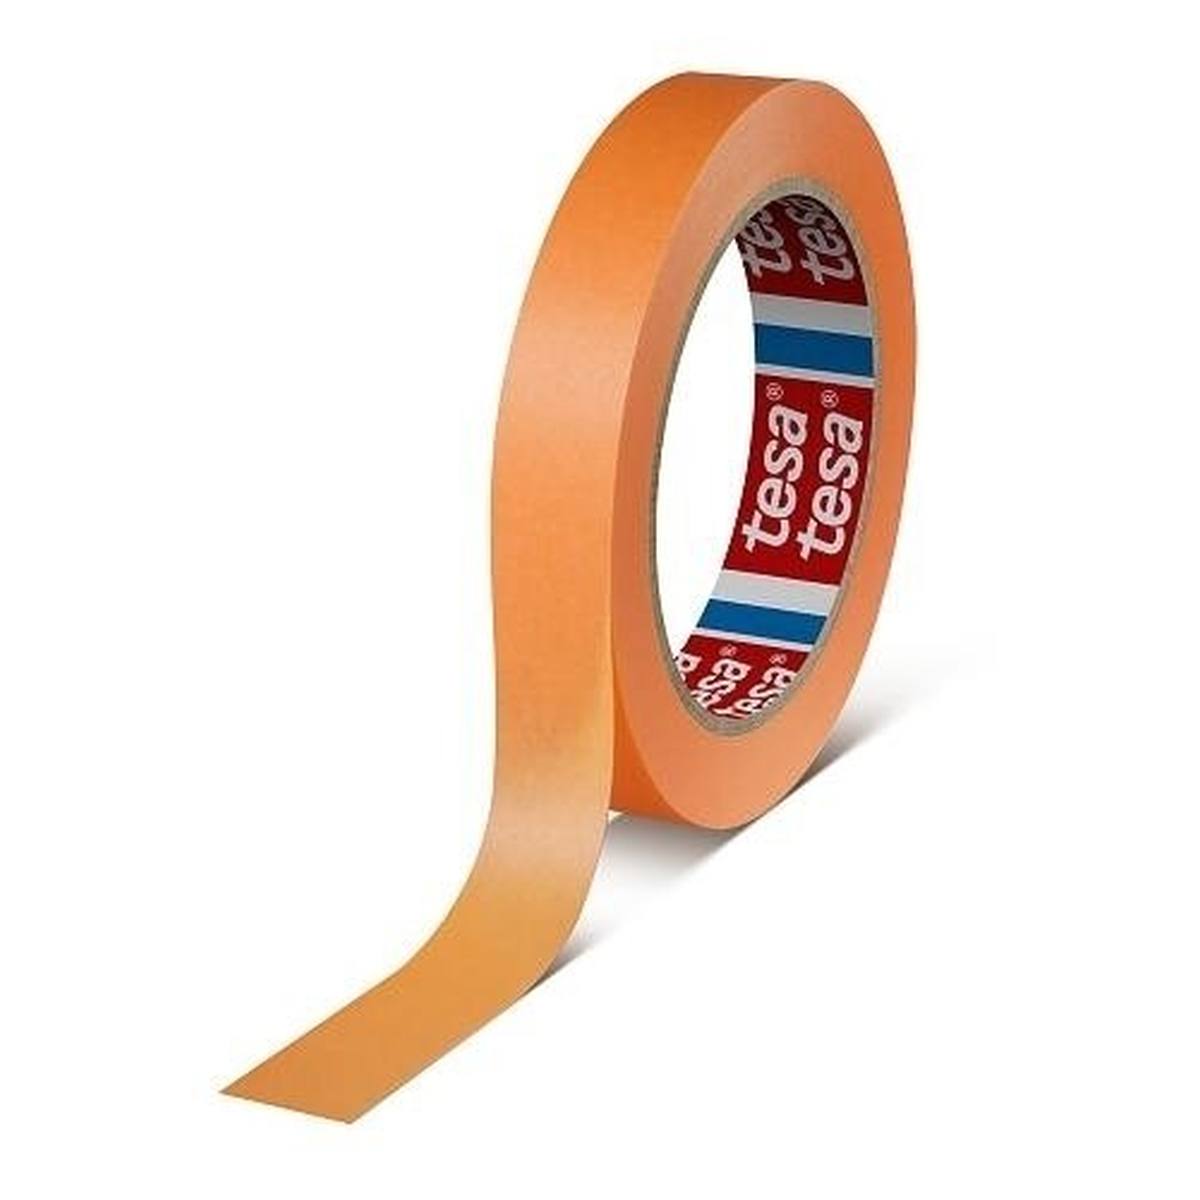 tesakrepp 4342 washi tape crepé de precisión 30mmx50m naranja